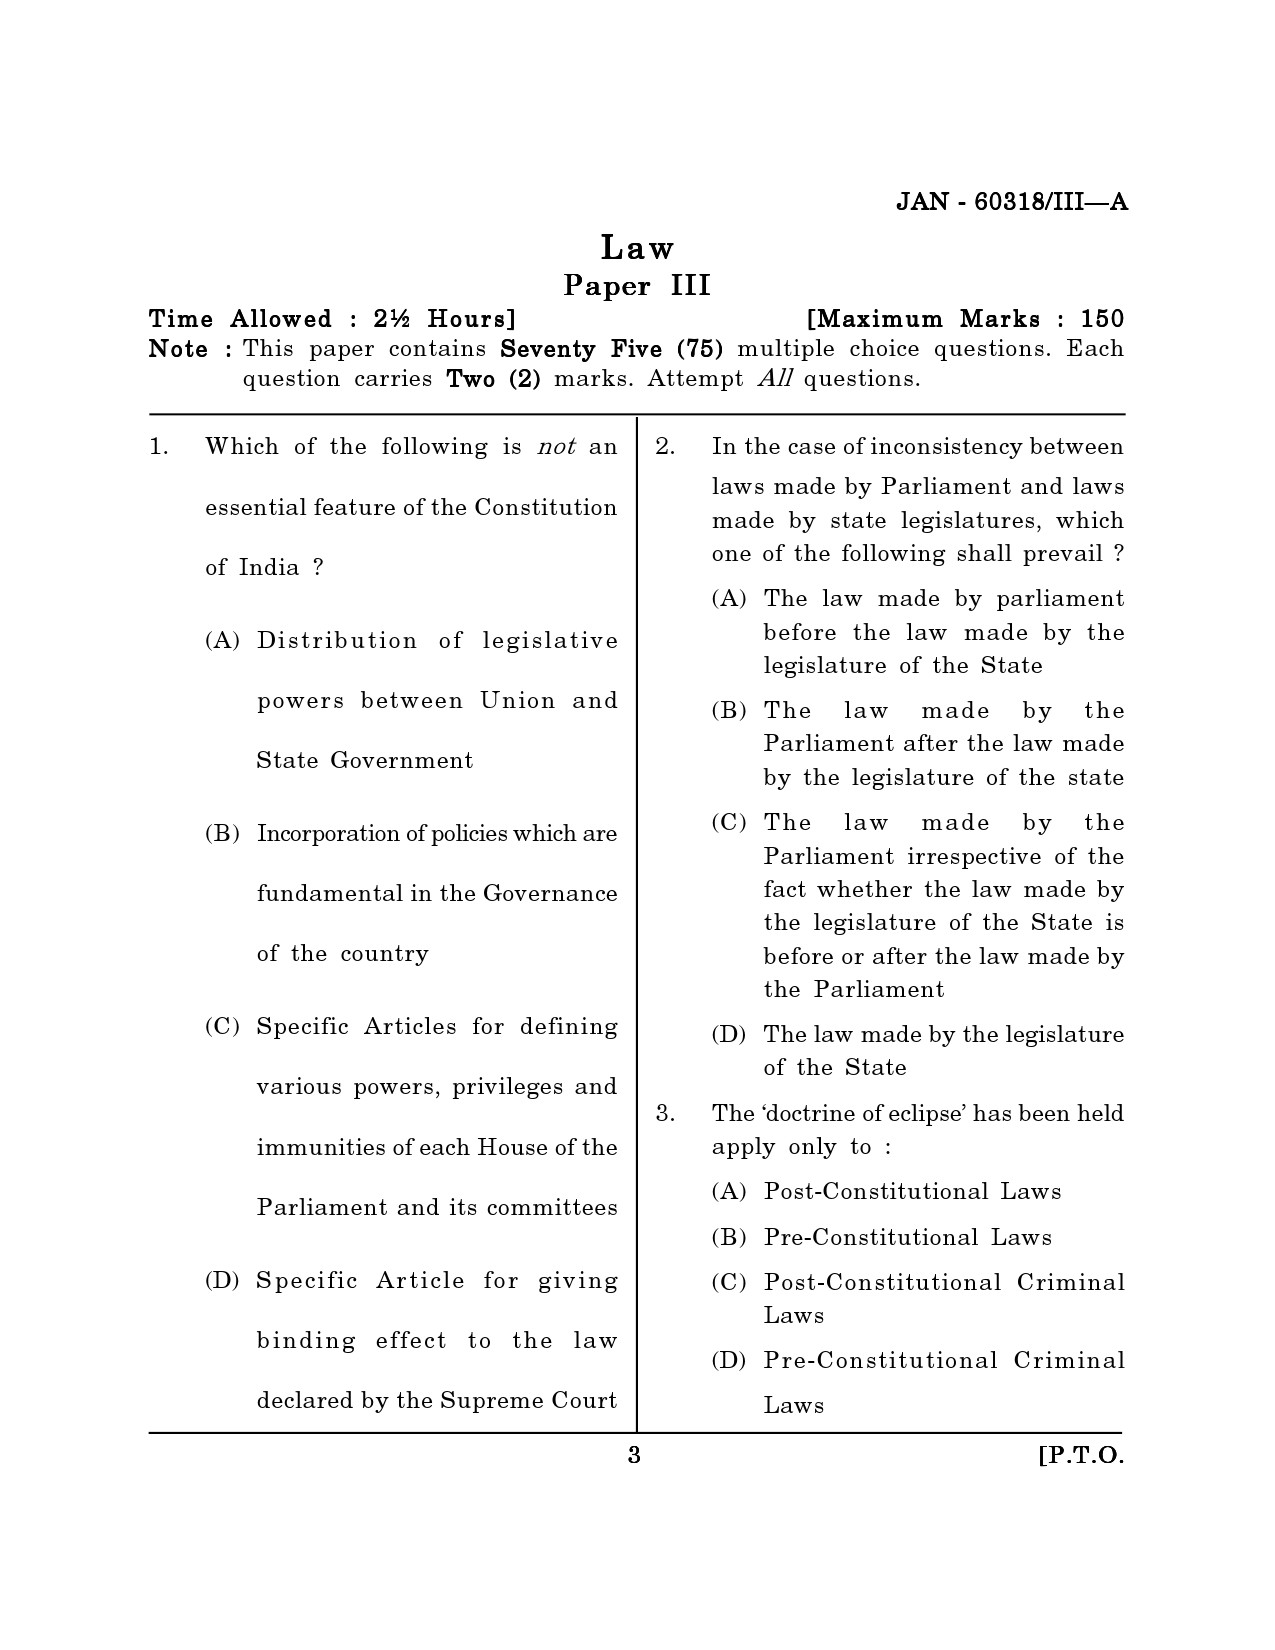 Maharashtra SET Law Question Paper III January 2018 2